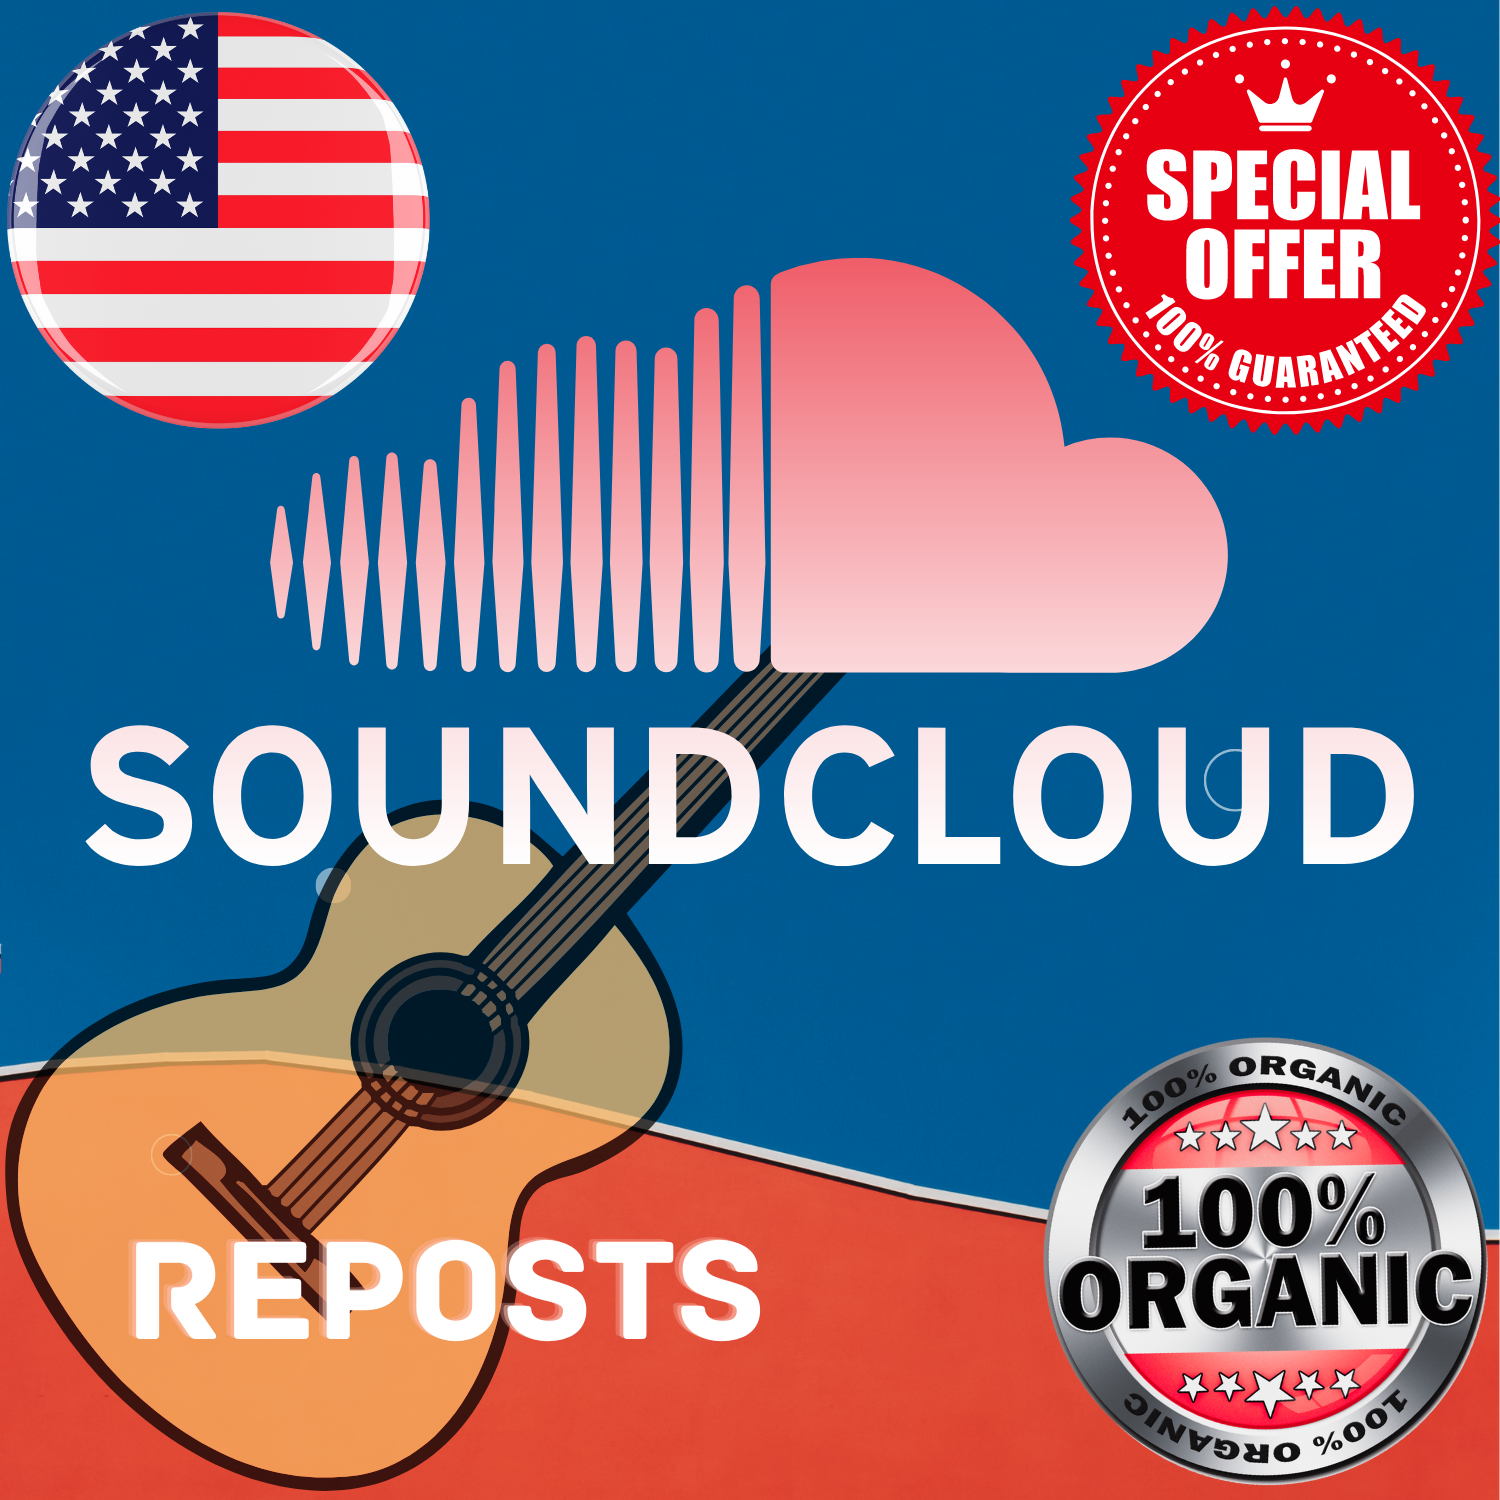 buy soundcloud reposts cheap